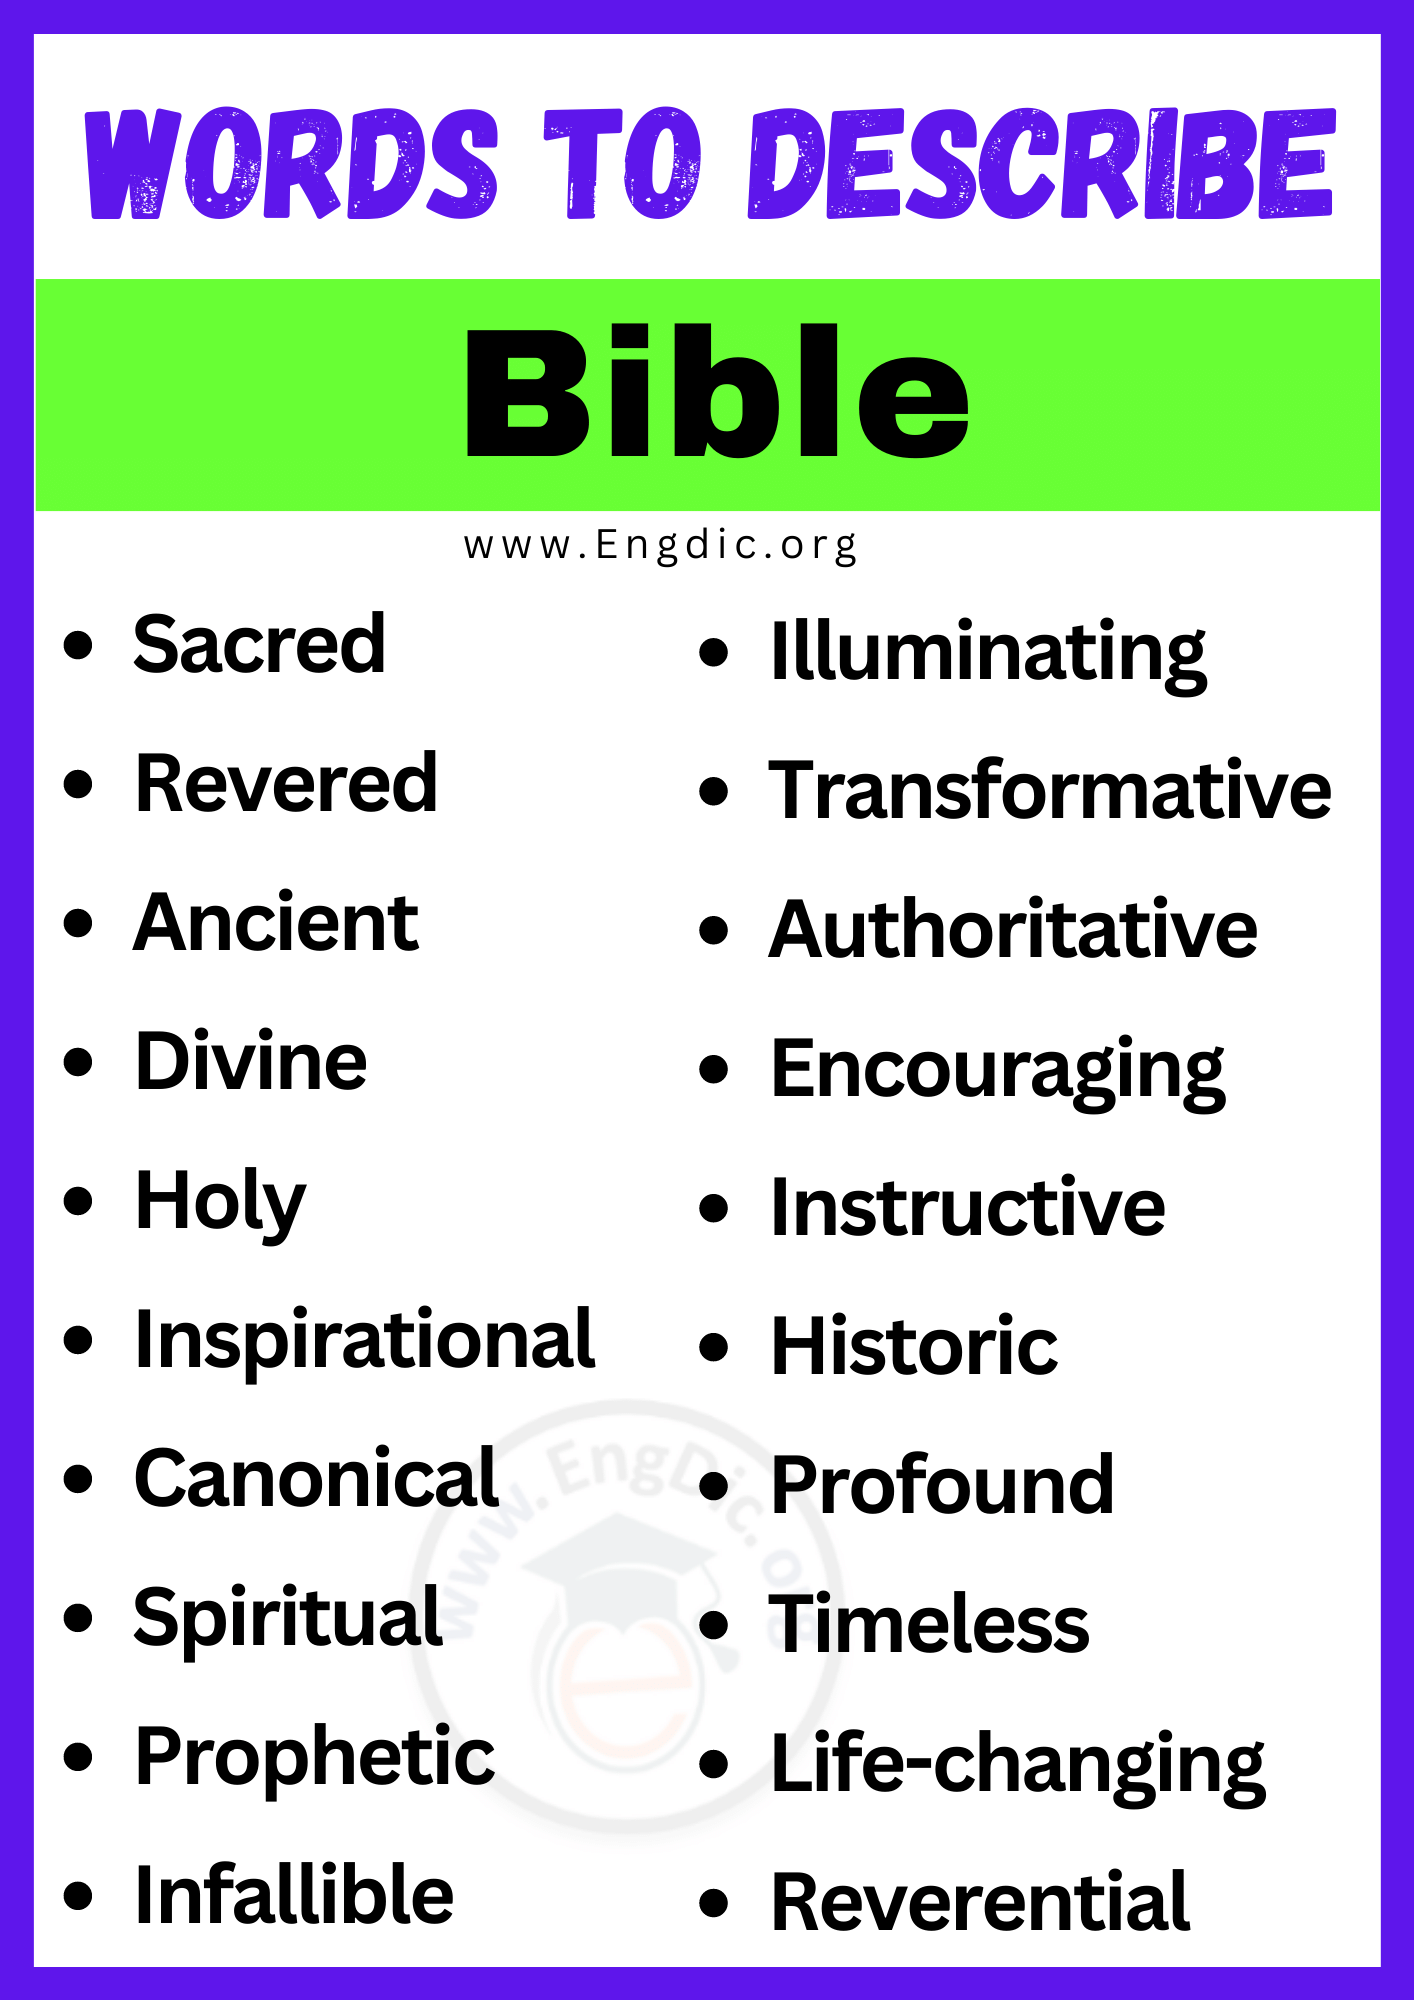 Words to Describe Bible